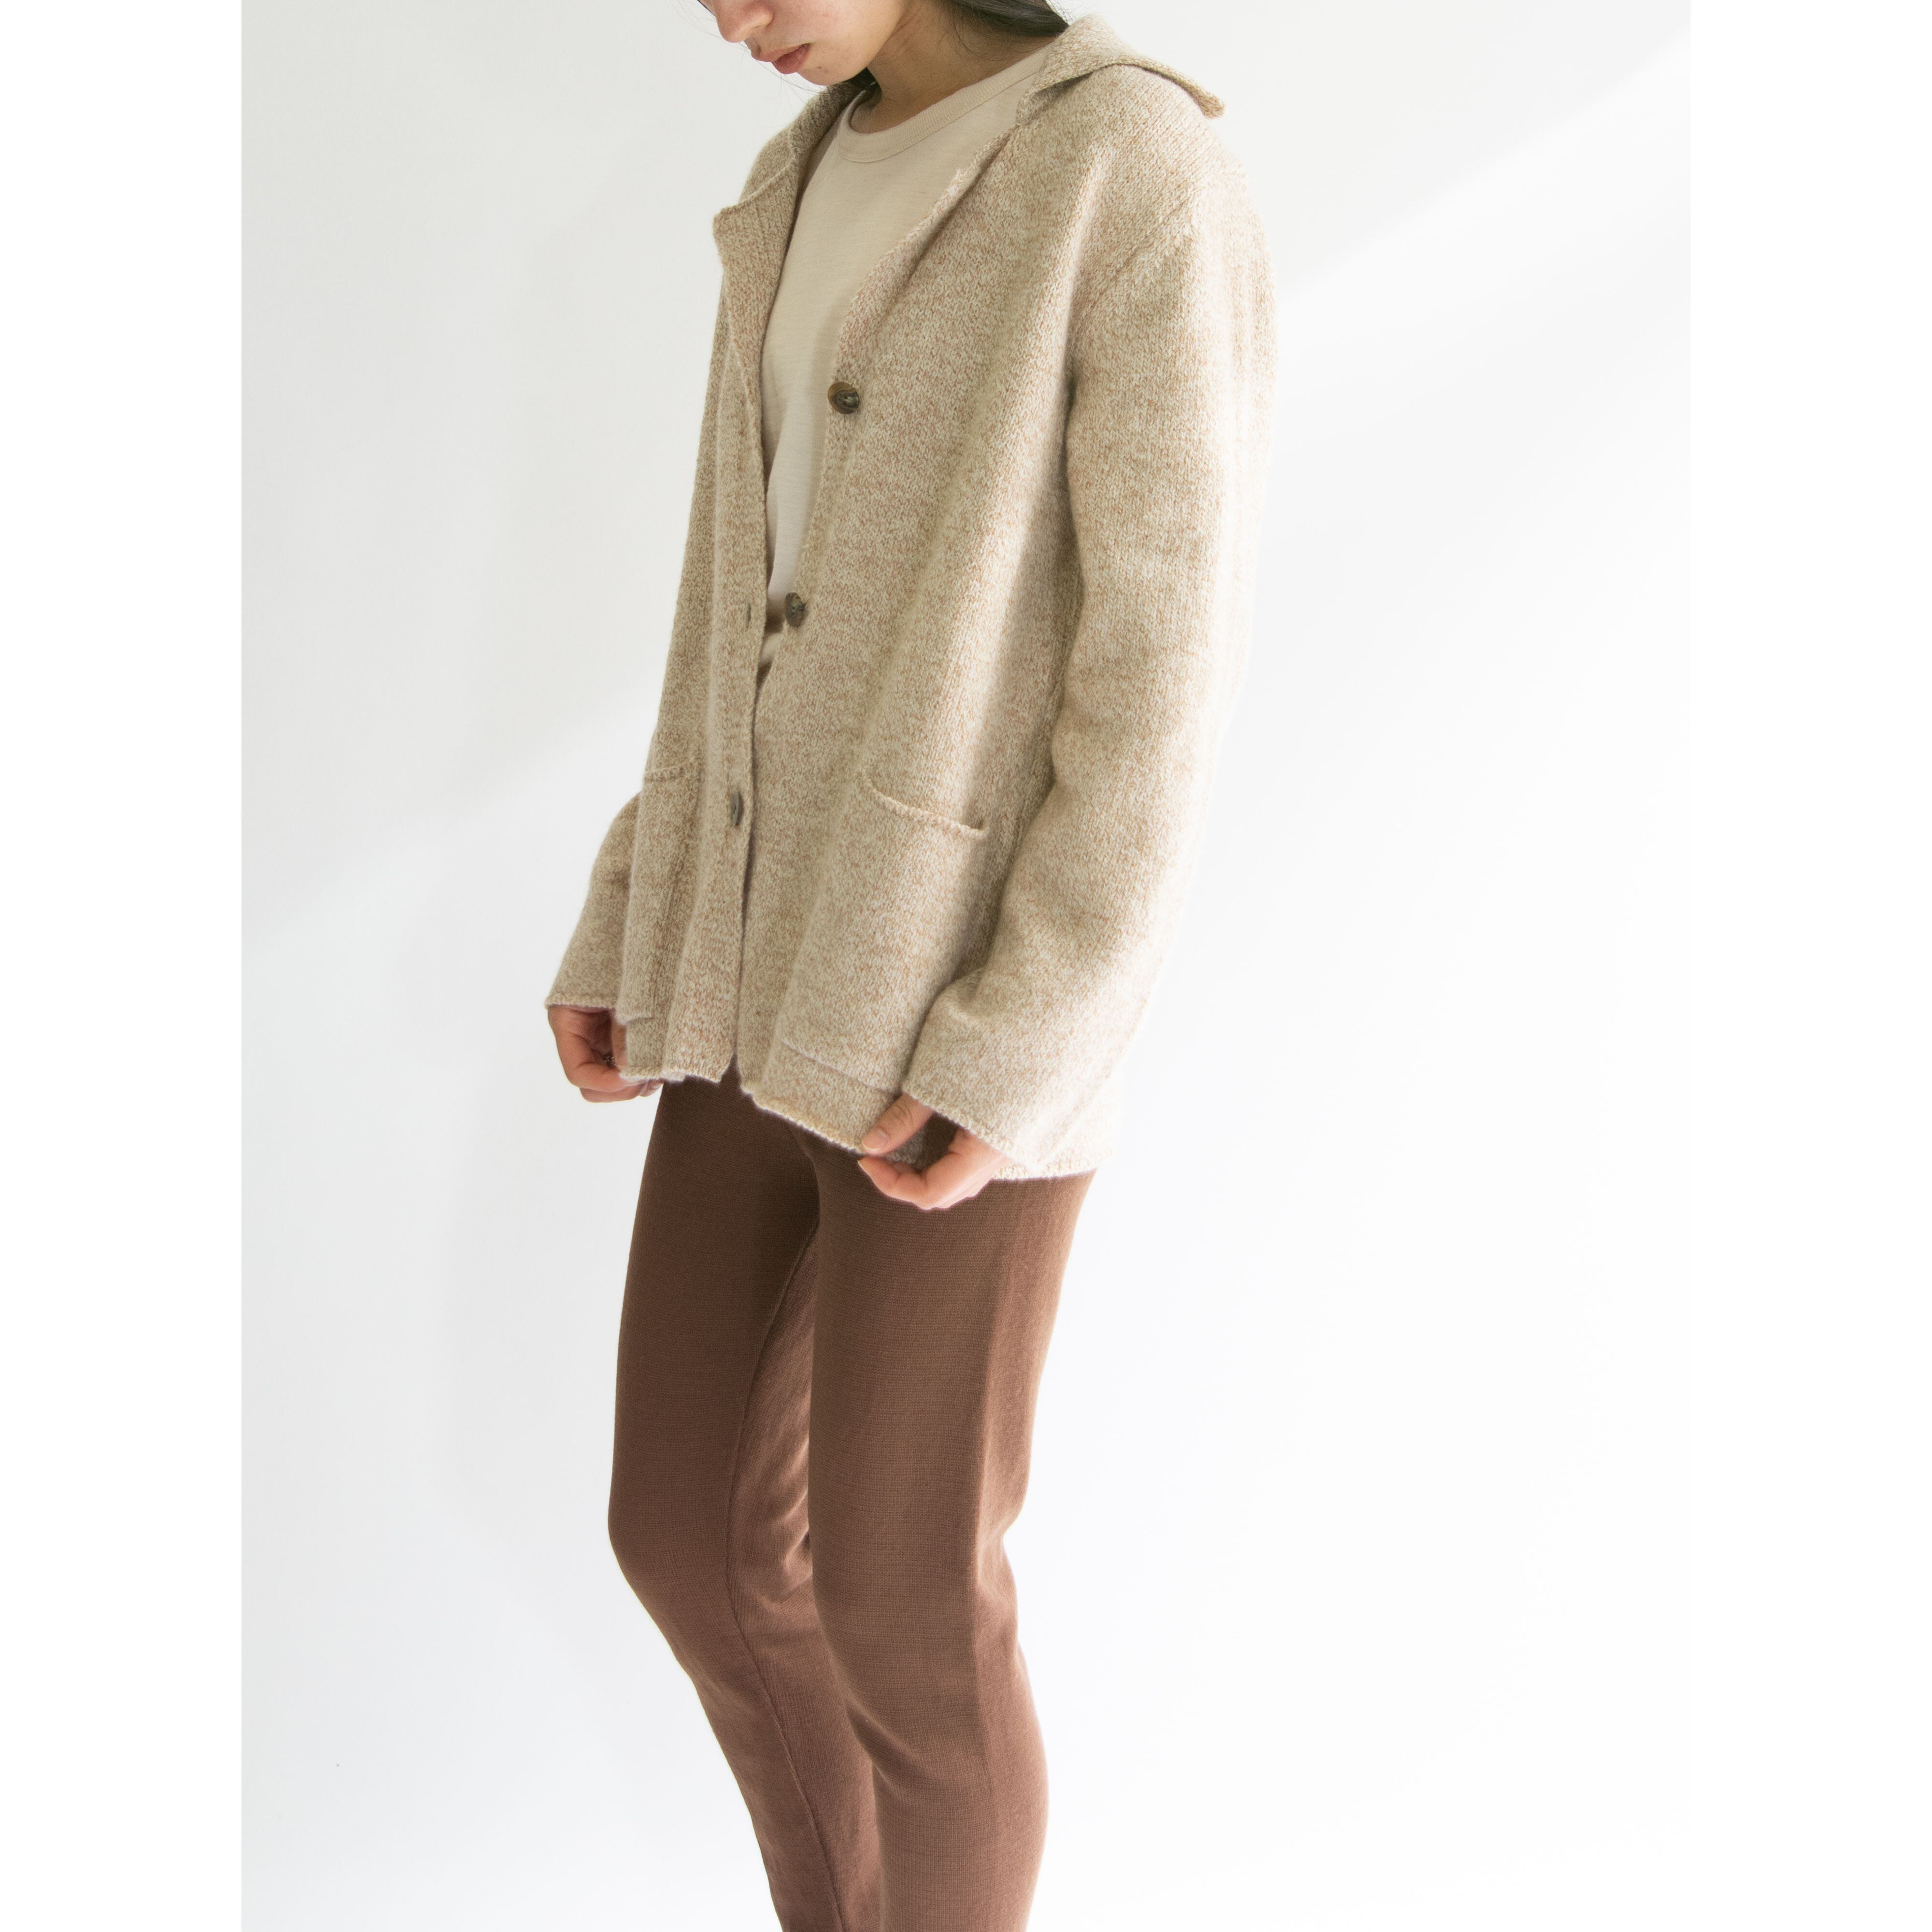 LANCEL】Made in Japan Wool-Nylon Knit Jacket Cardigan（ランセル ...